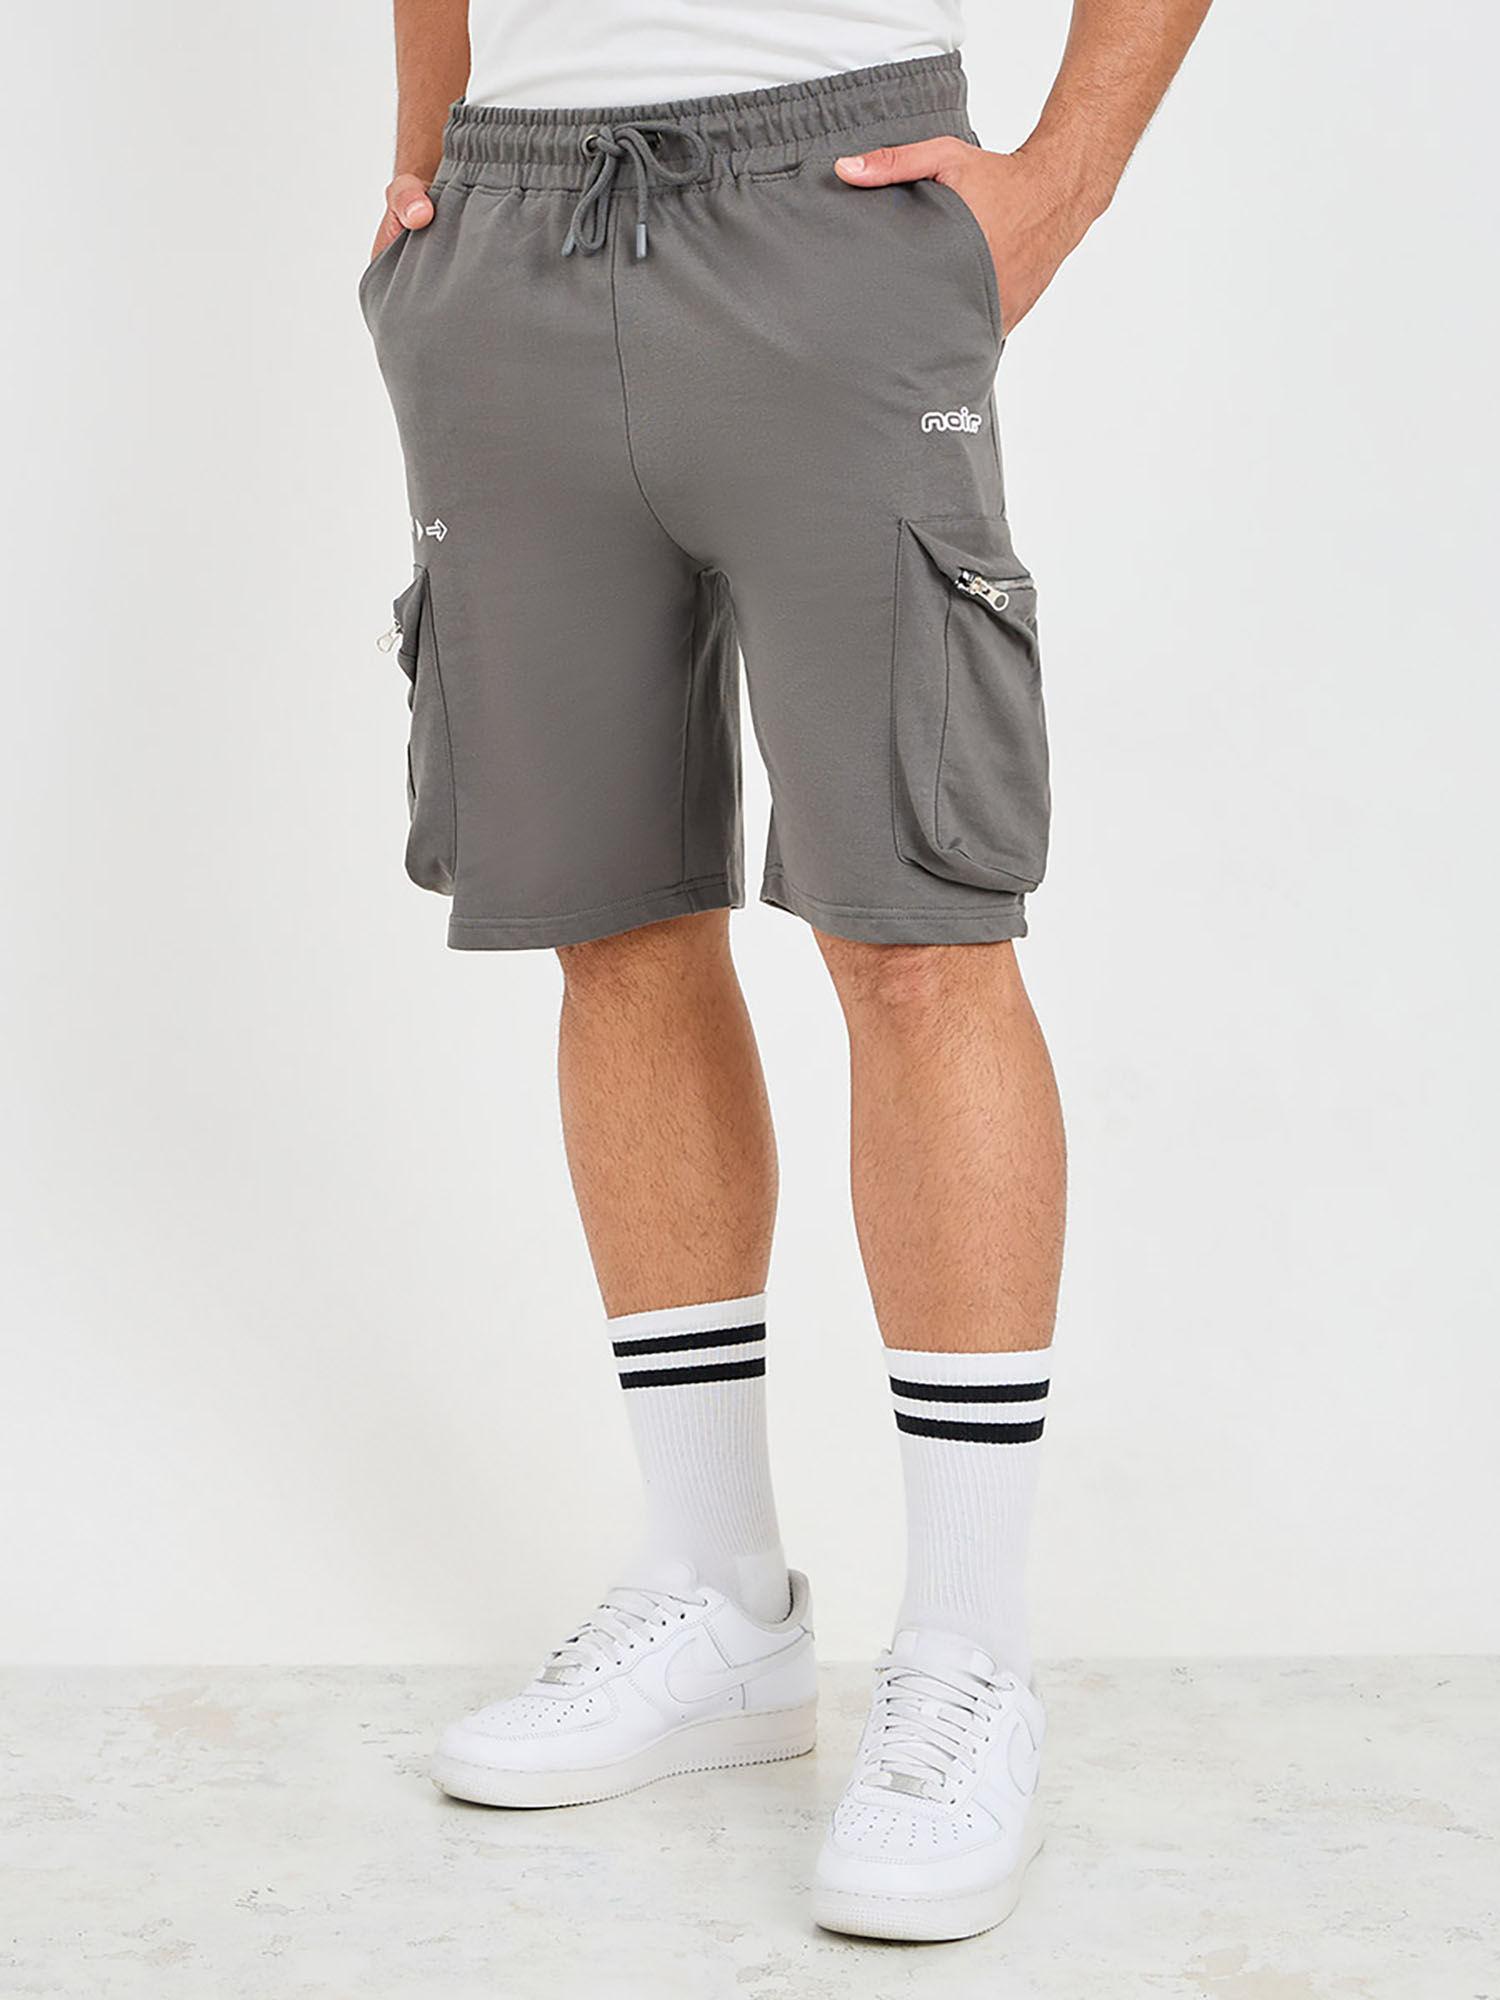 mens grey oversized zipper cargo shorts cotton